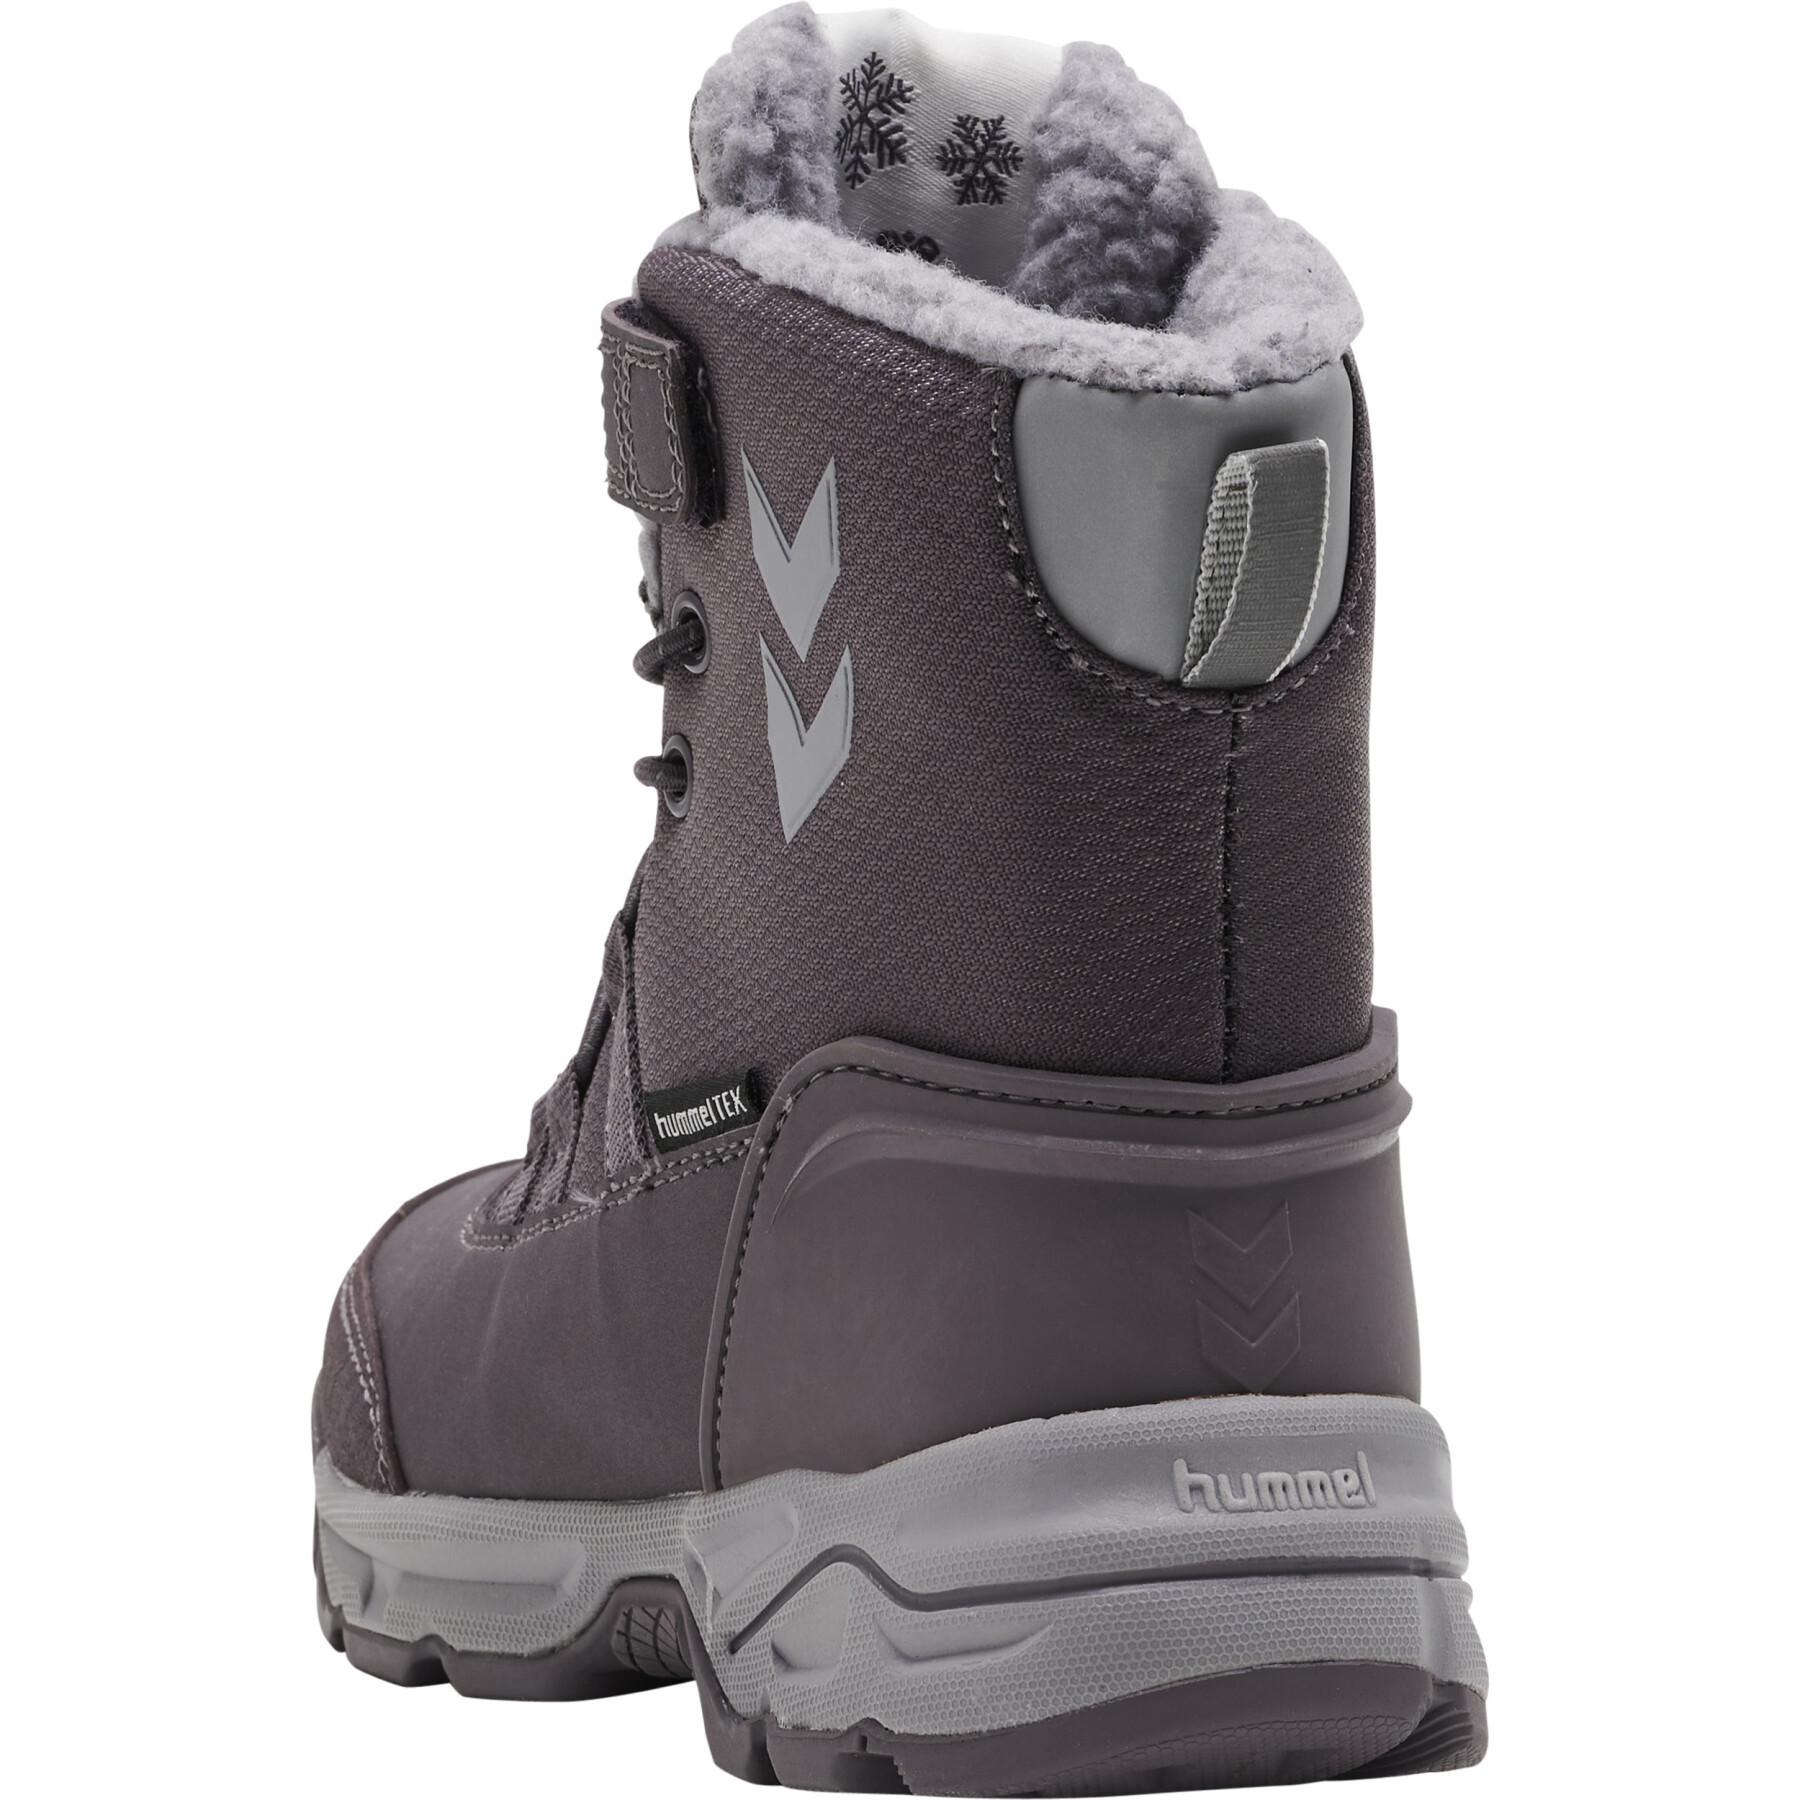 Children's snow boots Hummel Tex